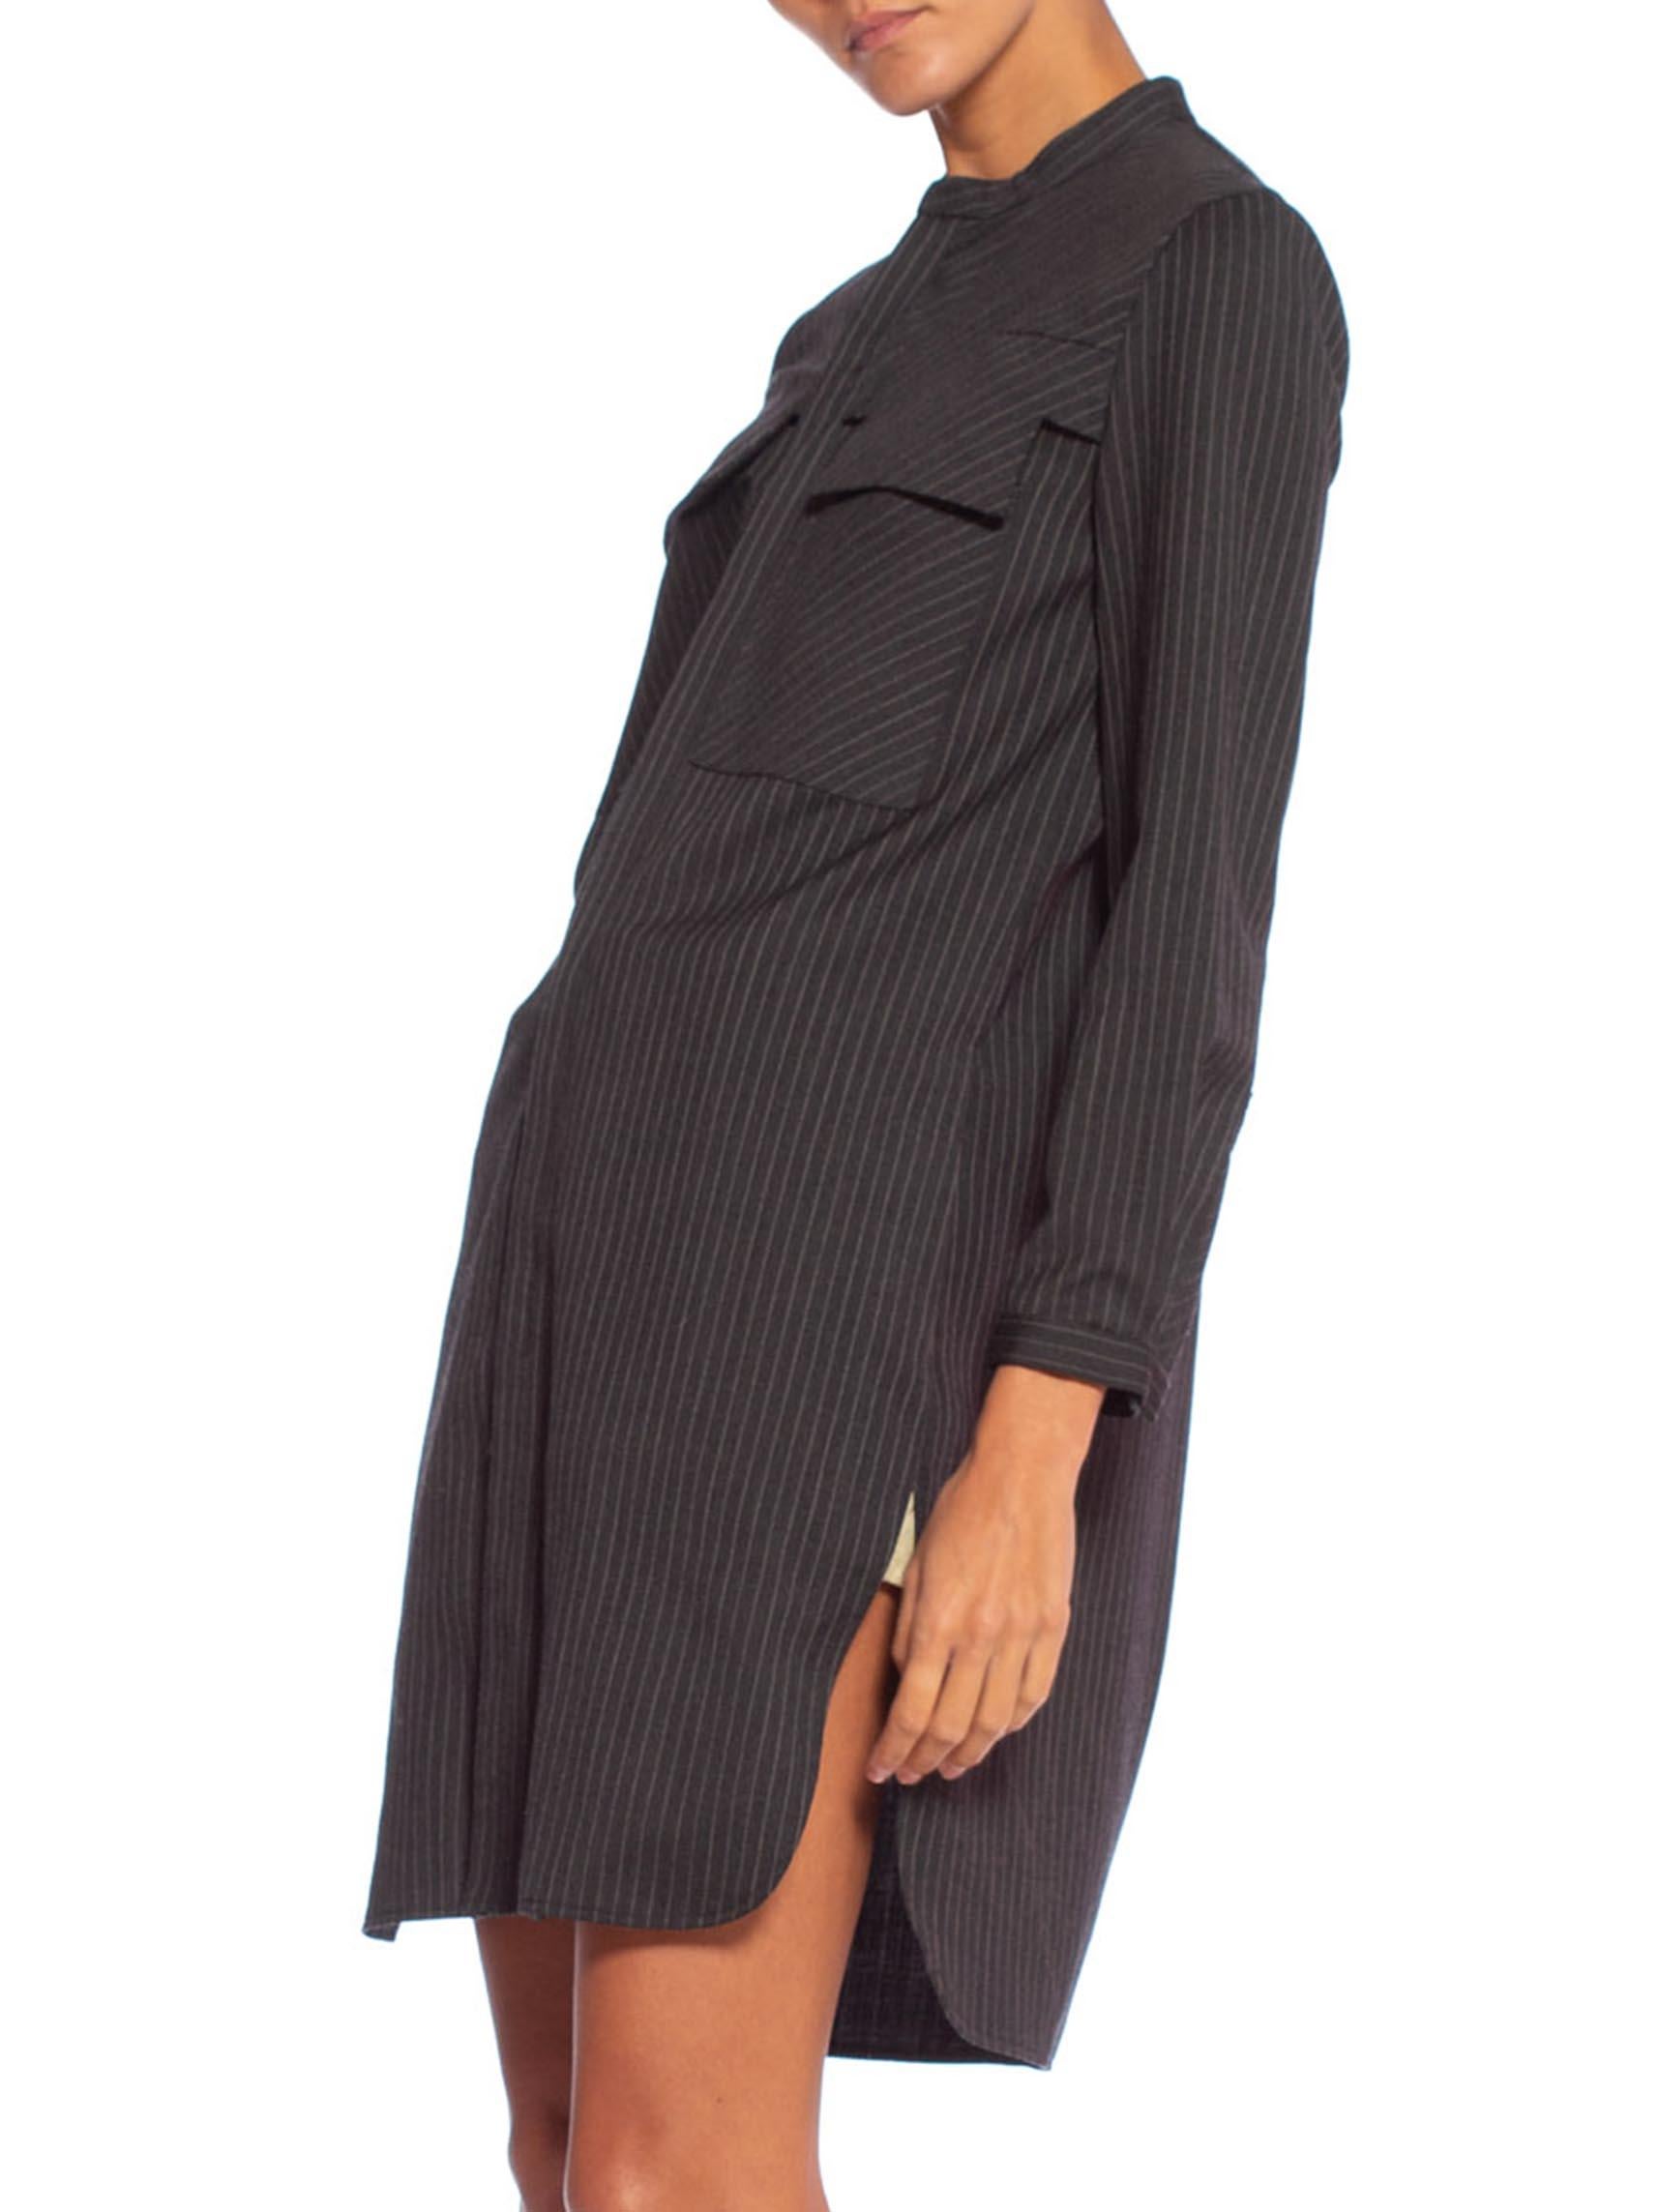 Women's 1980'S Dark Grey Wool Suiting Pinstripe Japanese Modernist Tunic Shirt Dress